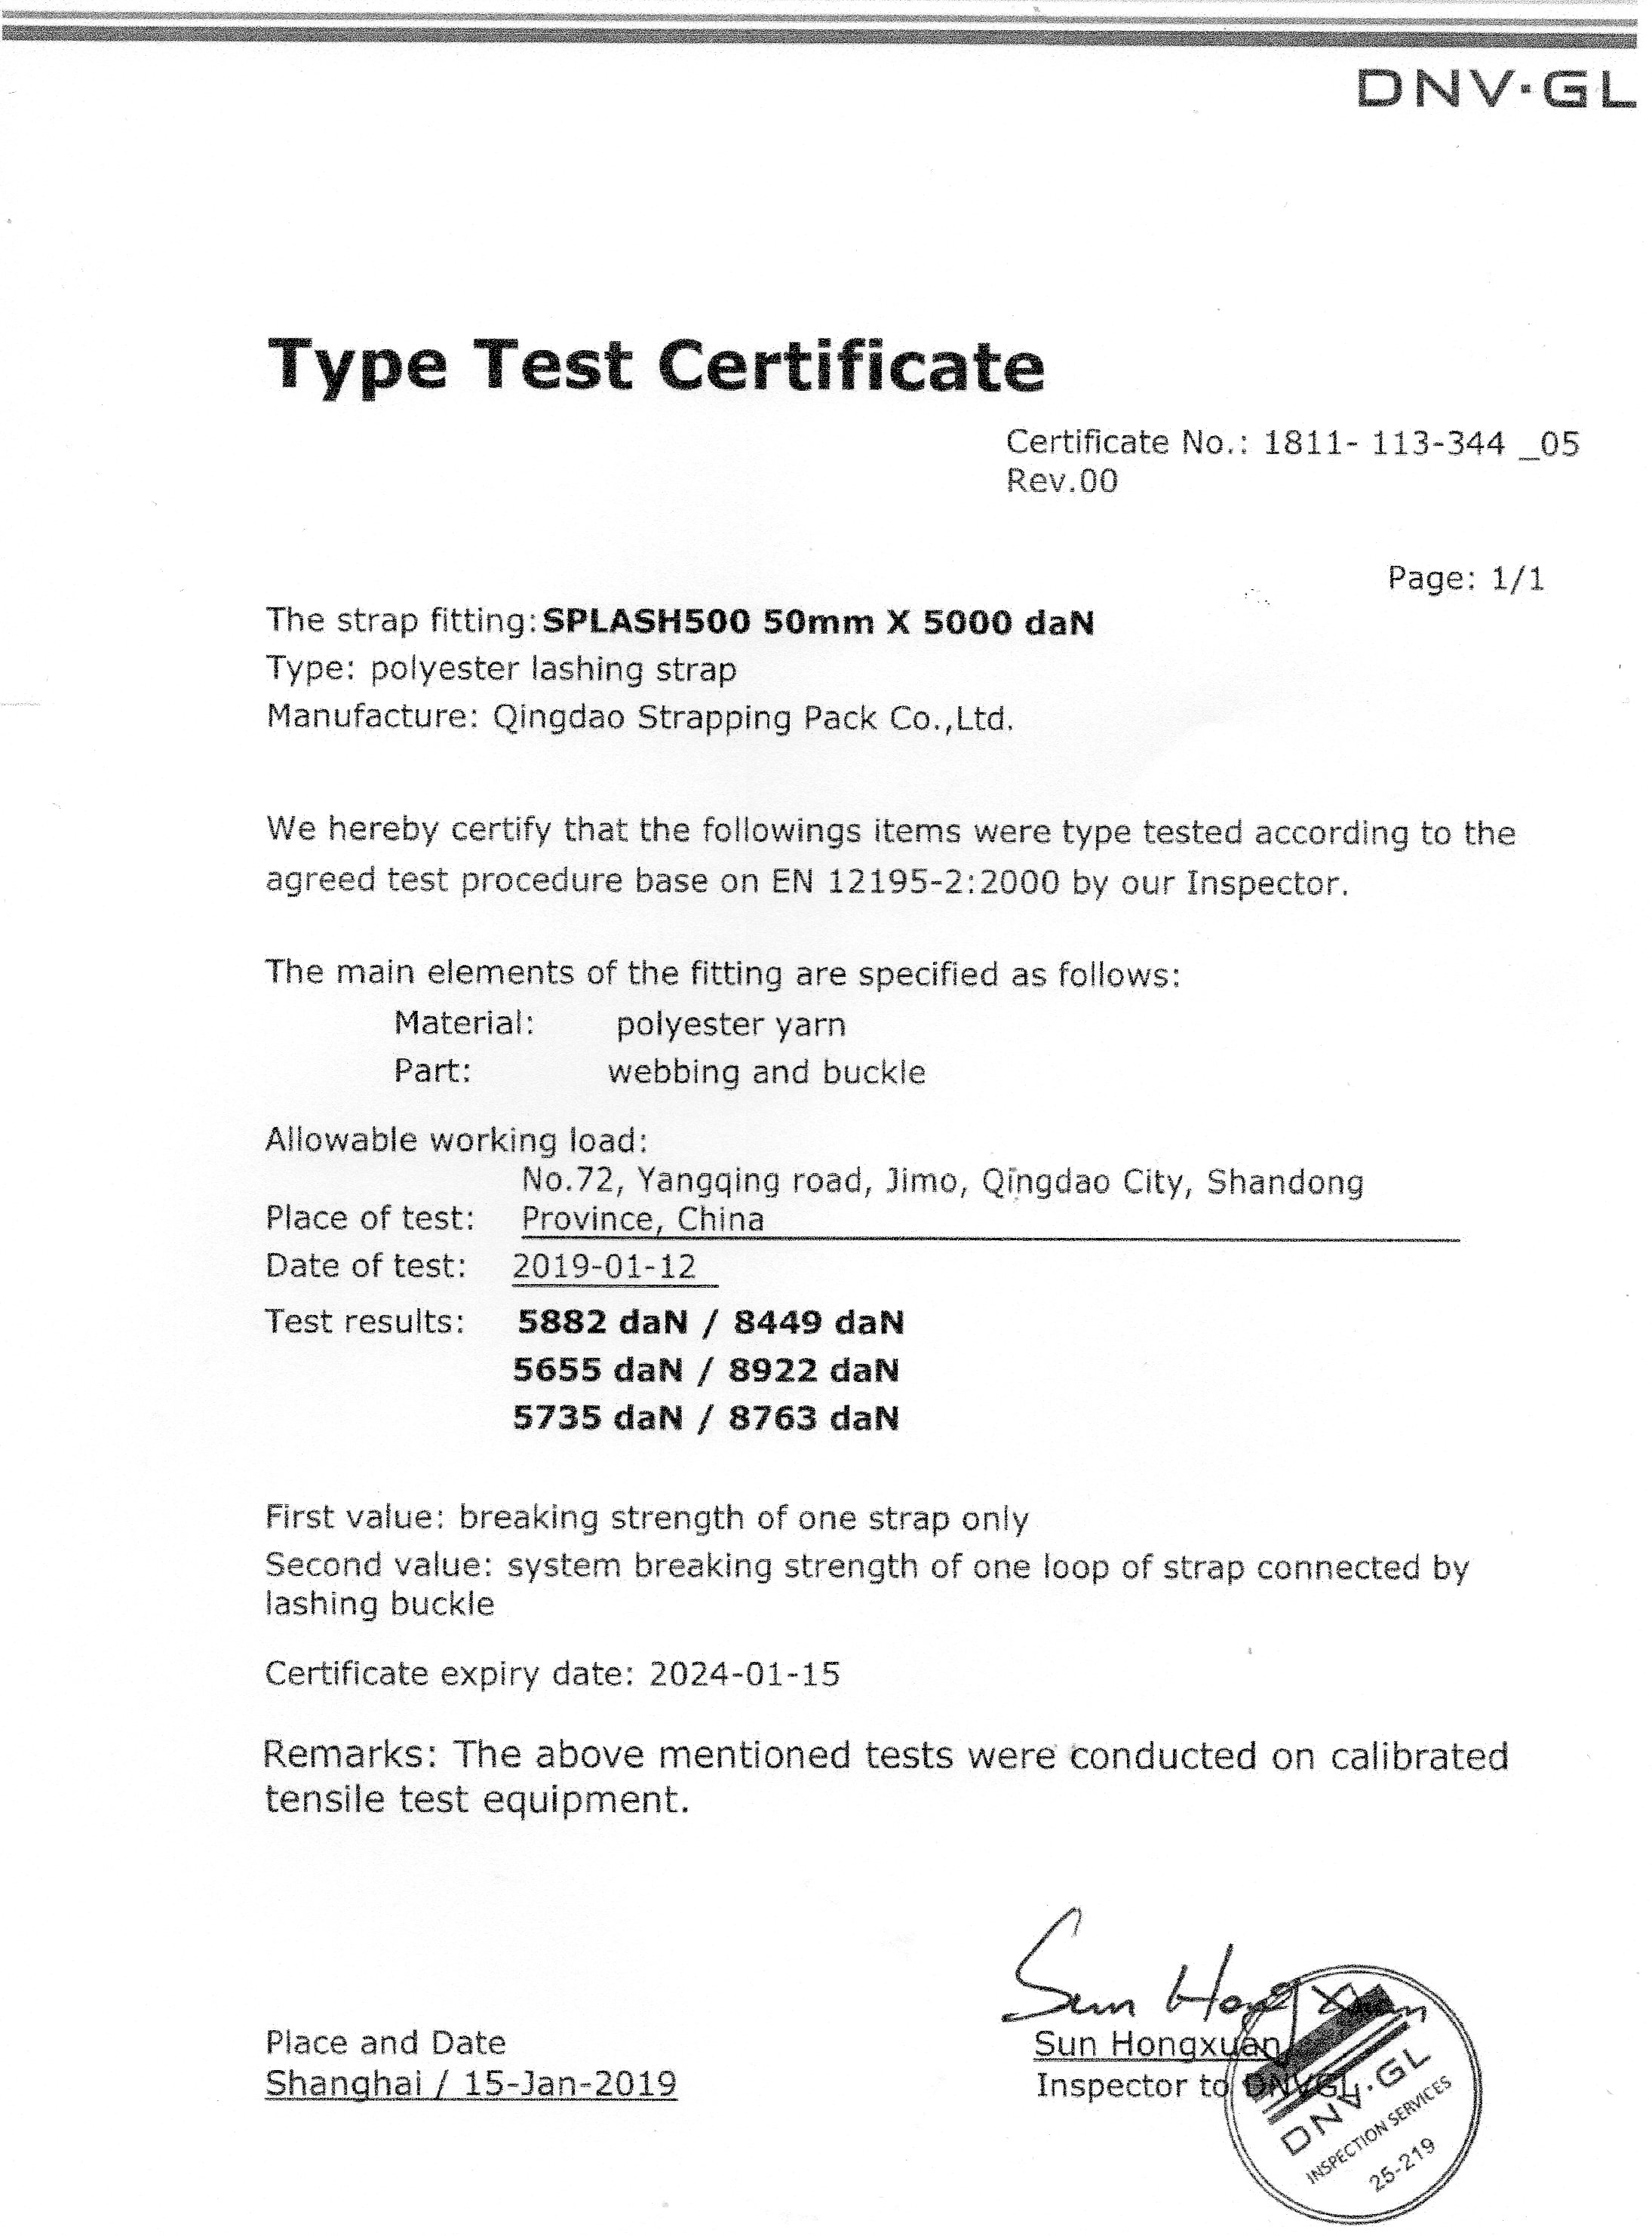 DNV GL certificate 50mm 5000 daN woven lashing strap